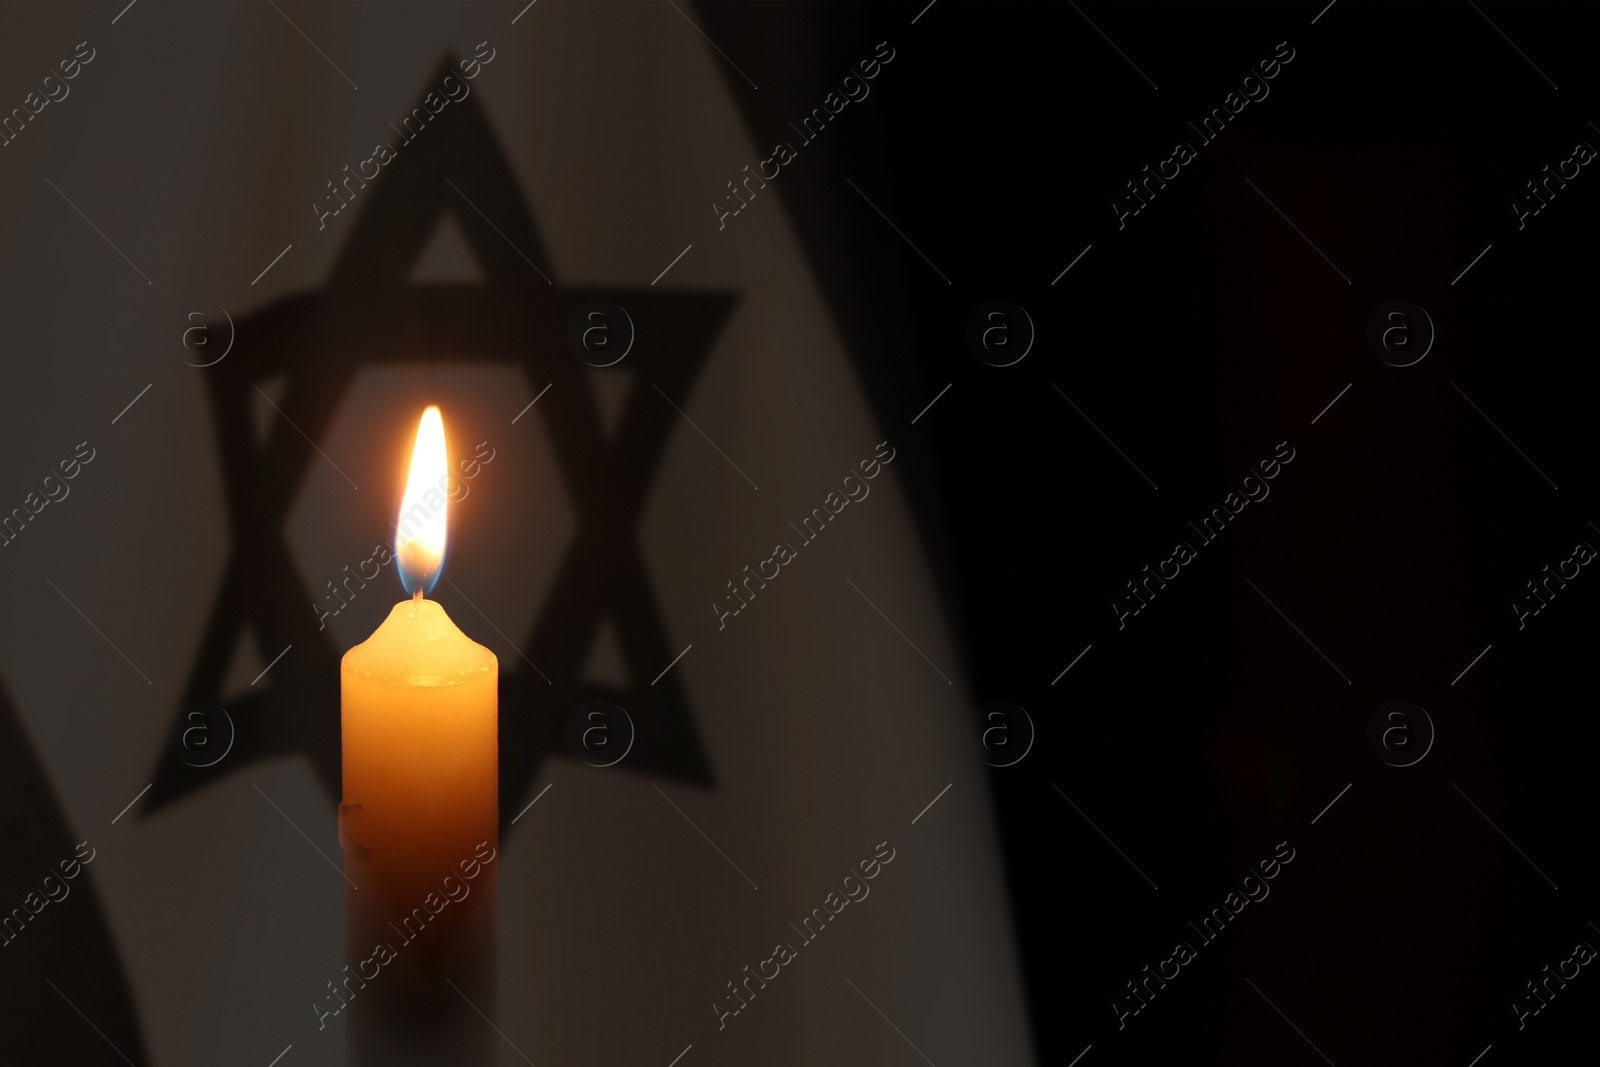 Image of Burning candle against flag of Israel on black background